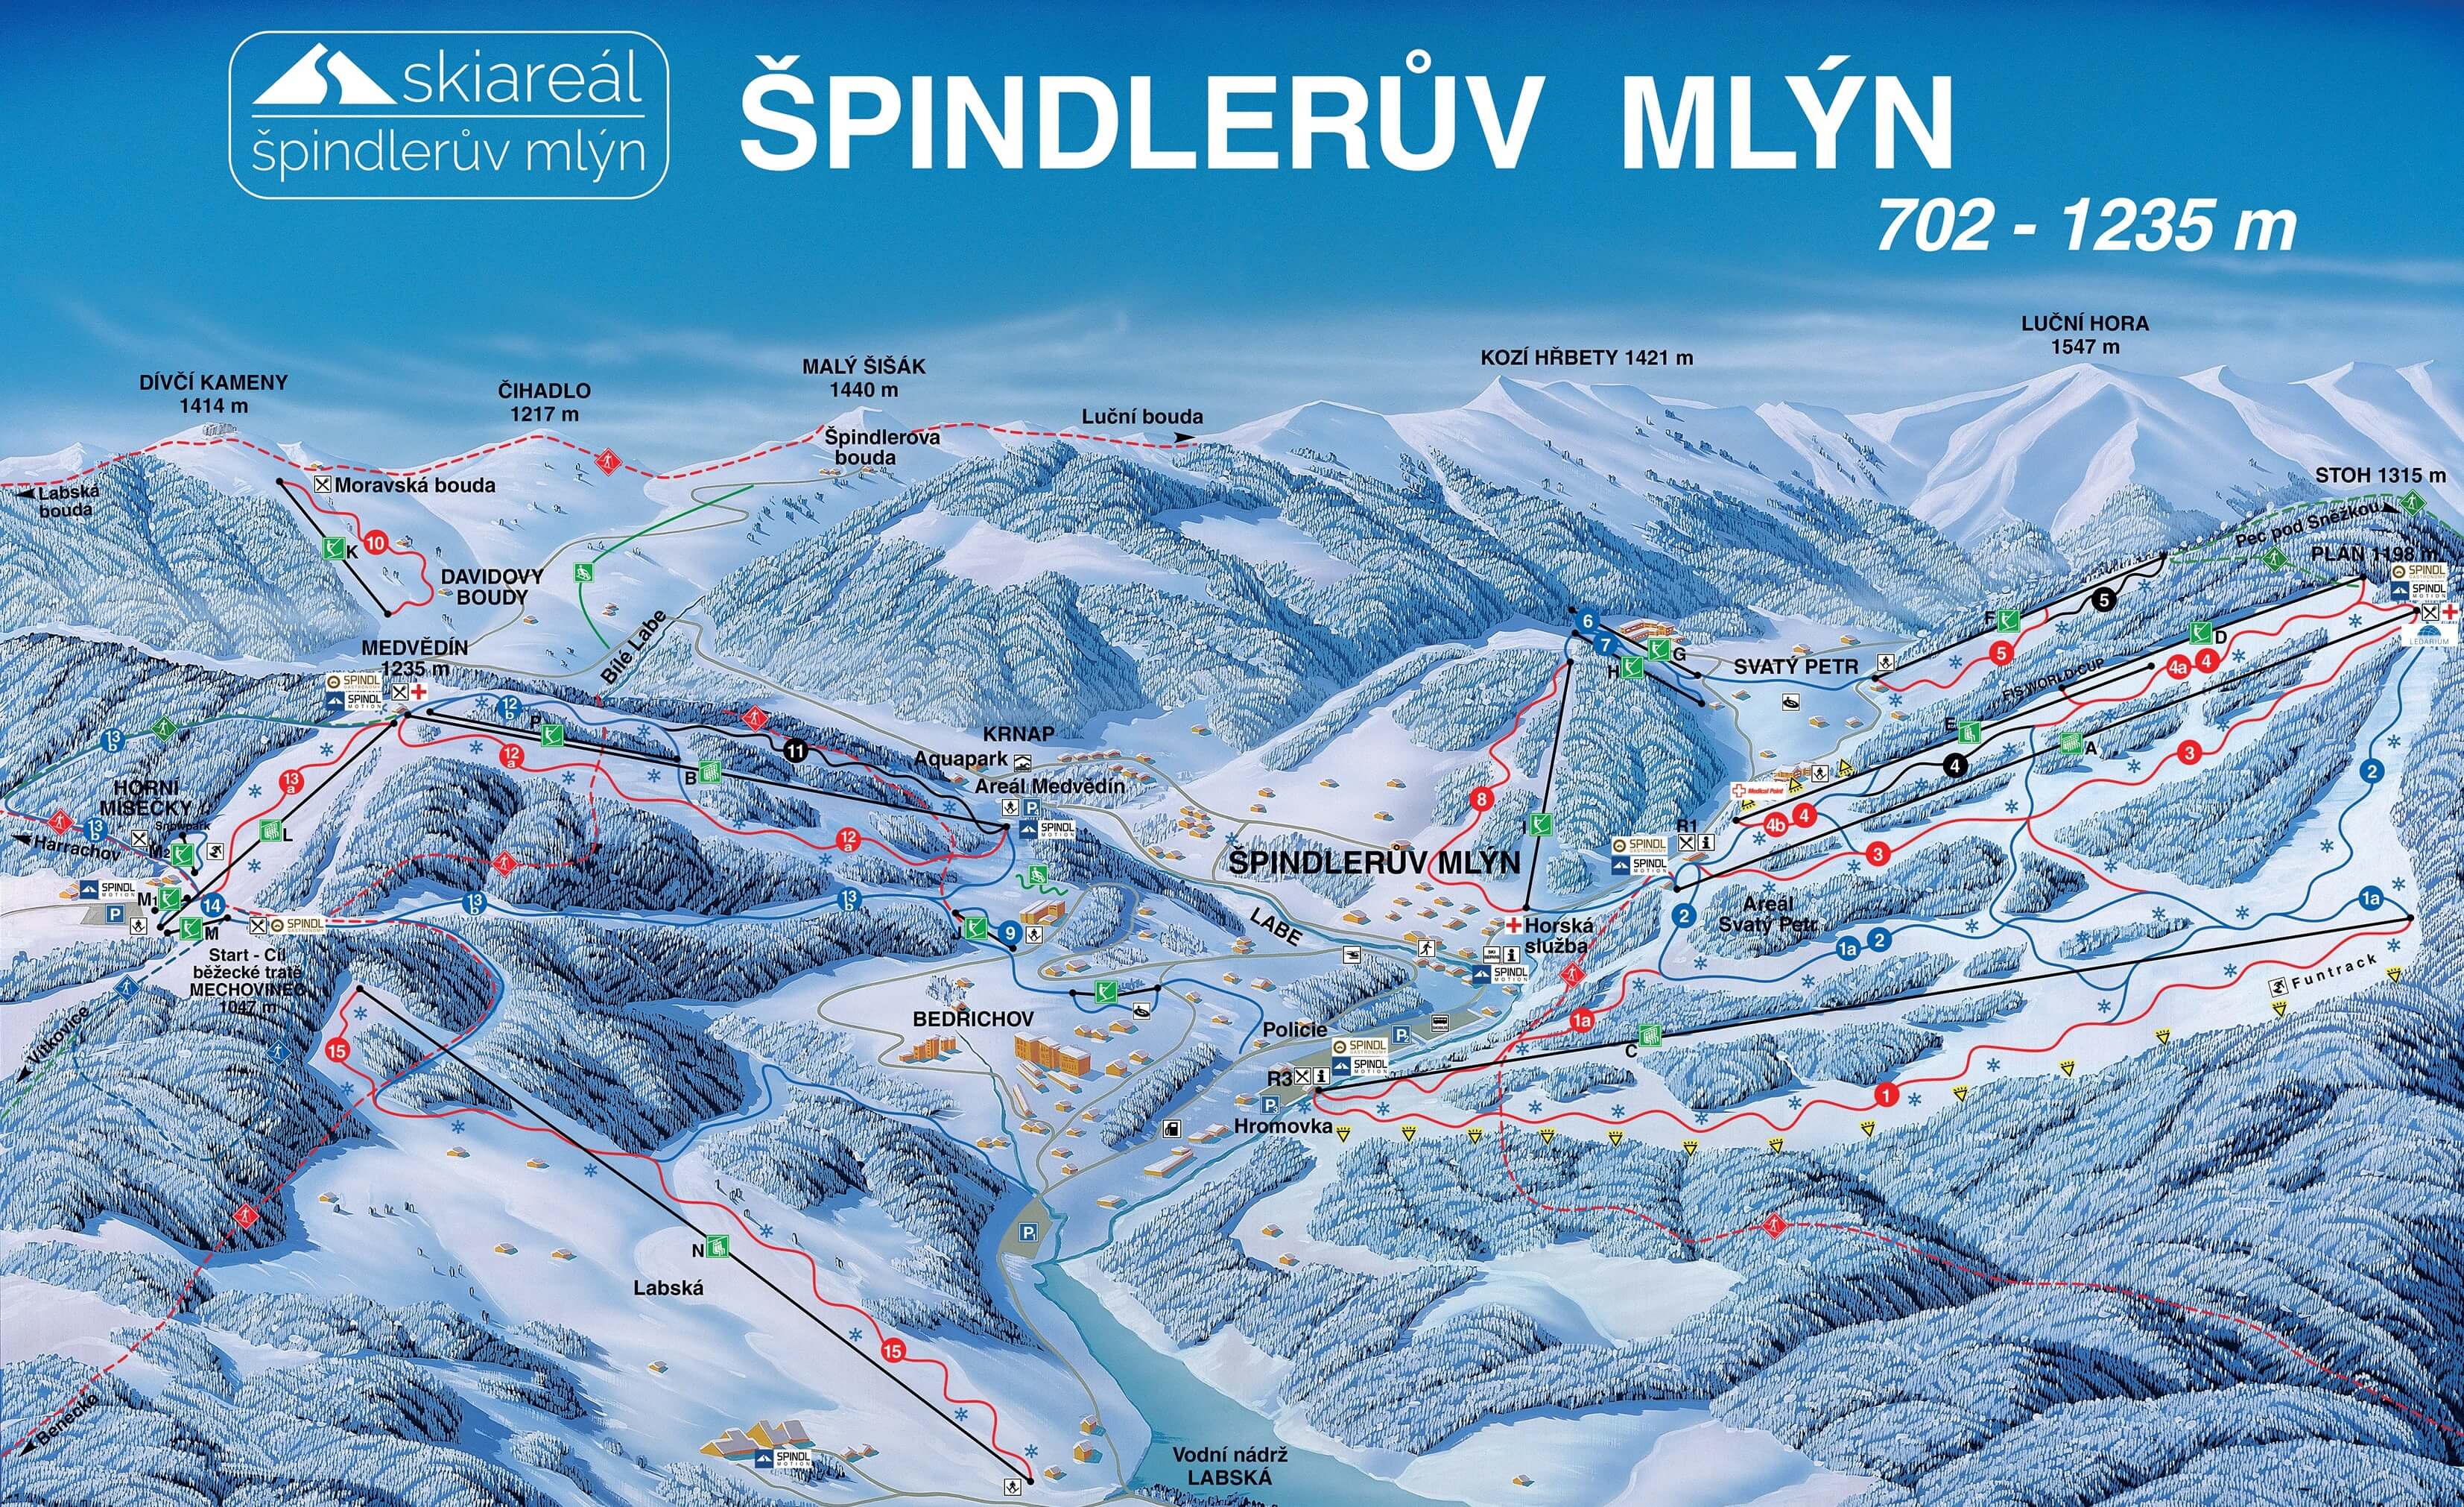 Spindleruv Mlyn slopes